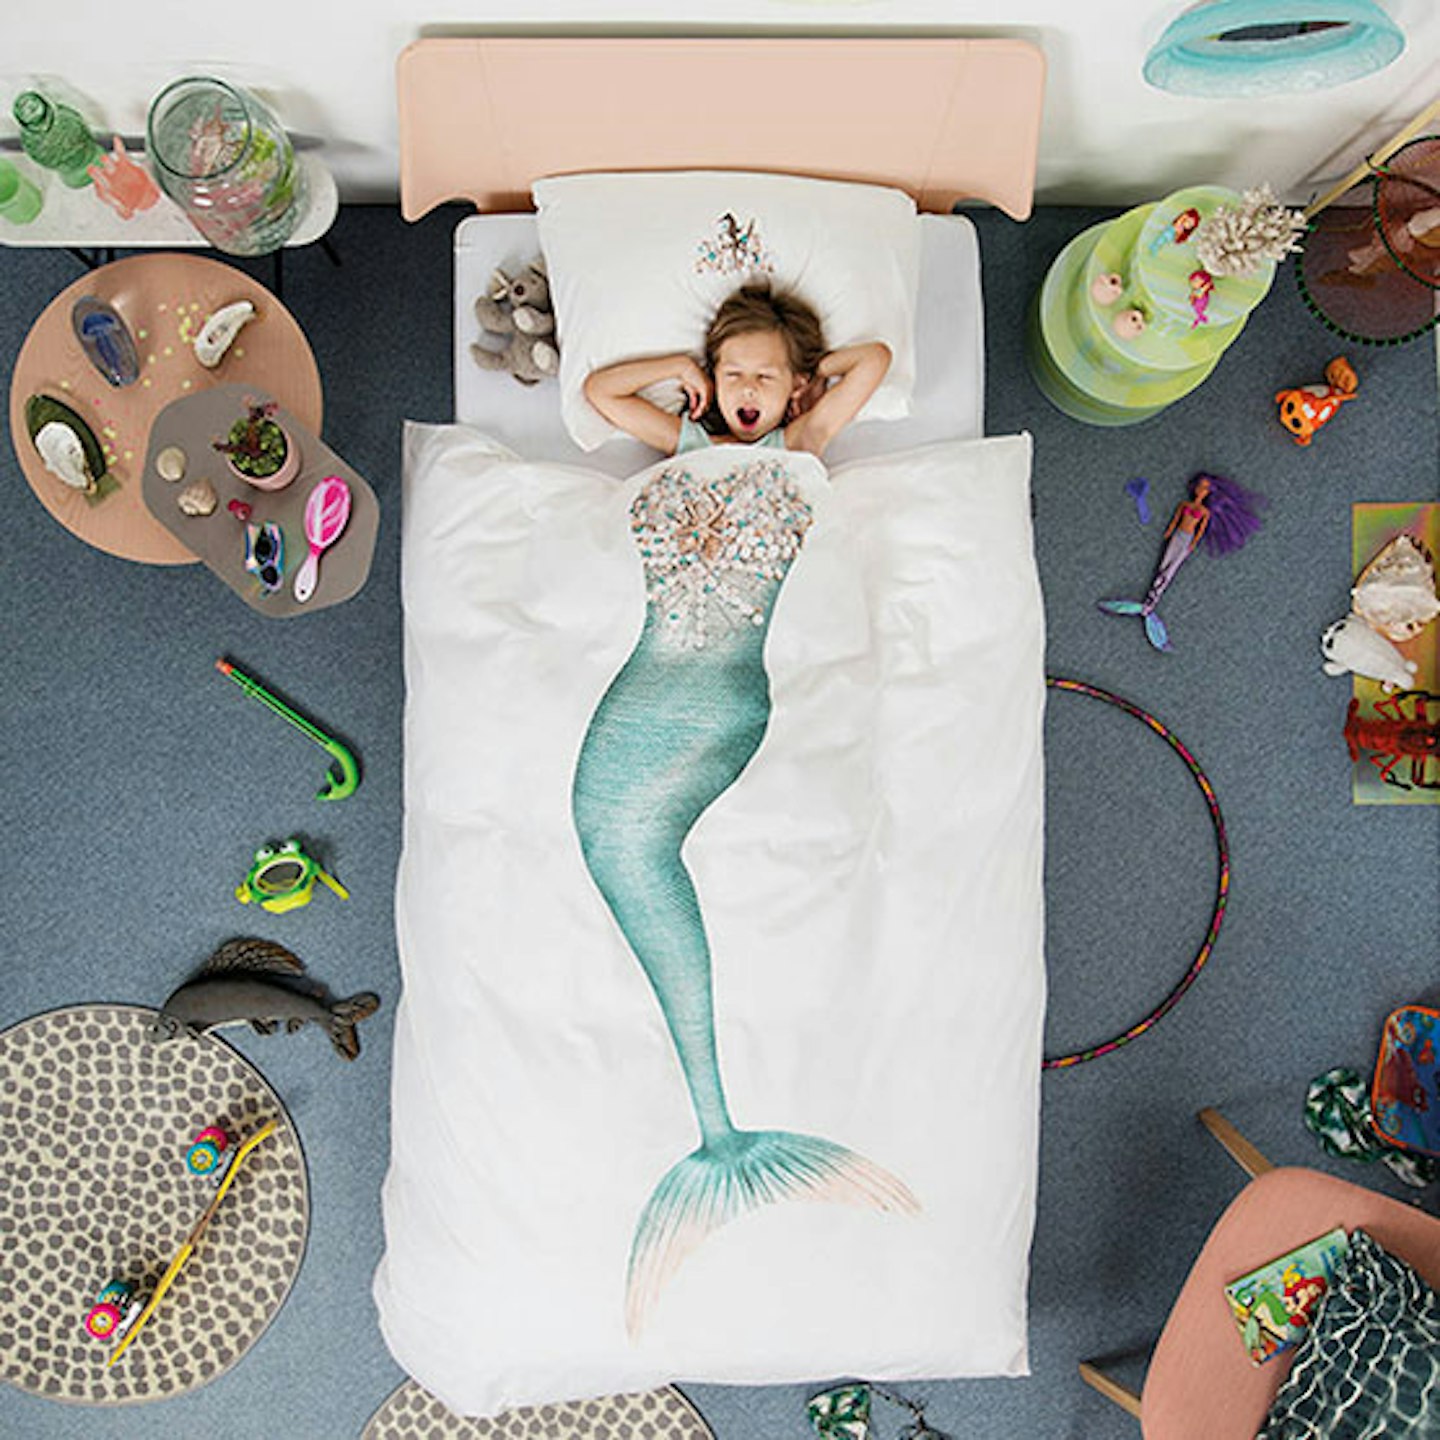 Best mermaid duvet cover Cuckooland, Snurk Childrenu0026#039;s Mermaid Duvet Bedding Set